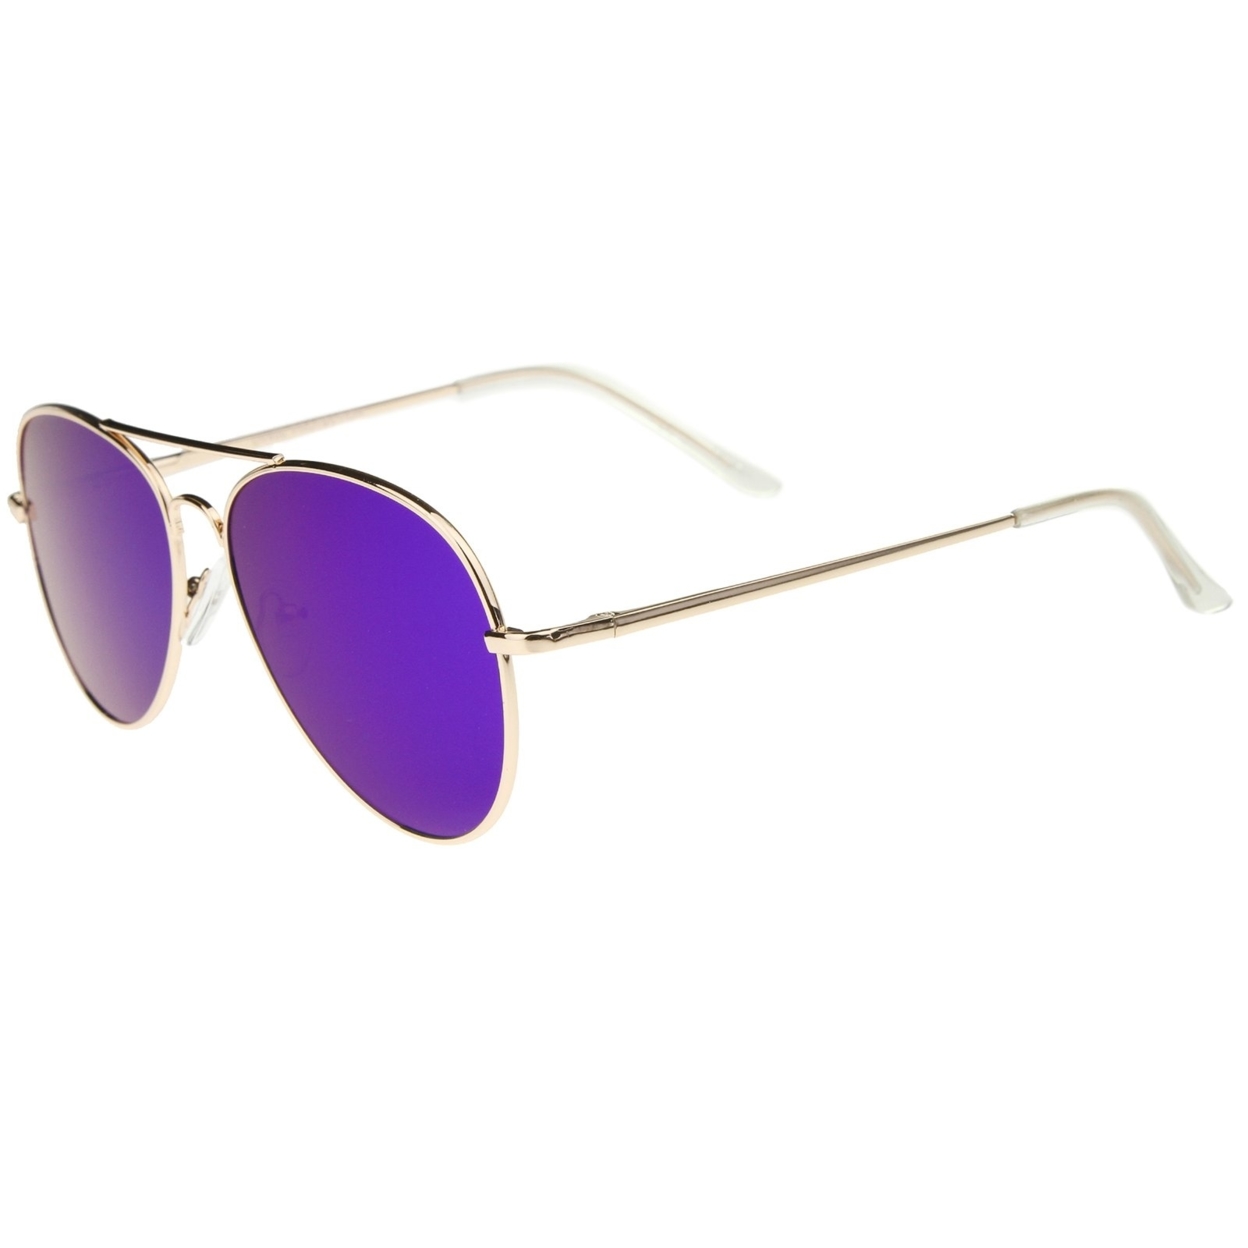 Small Full Metal Color Mirror Teardrop Flat Lens Aviator Sunglasses 56mm - Gold / Orange Mirror